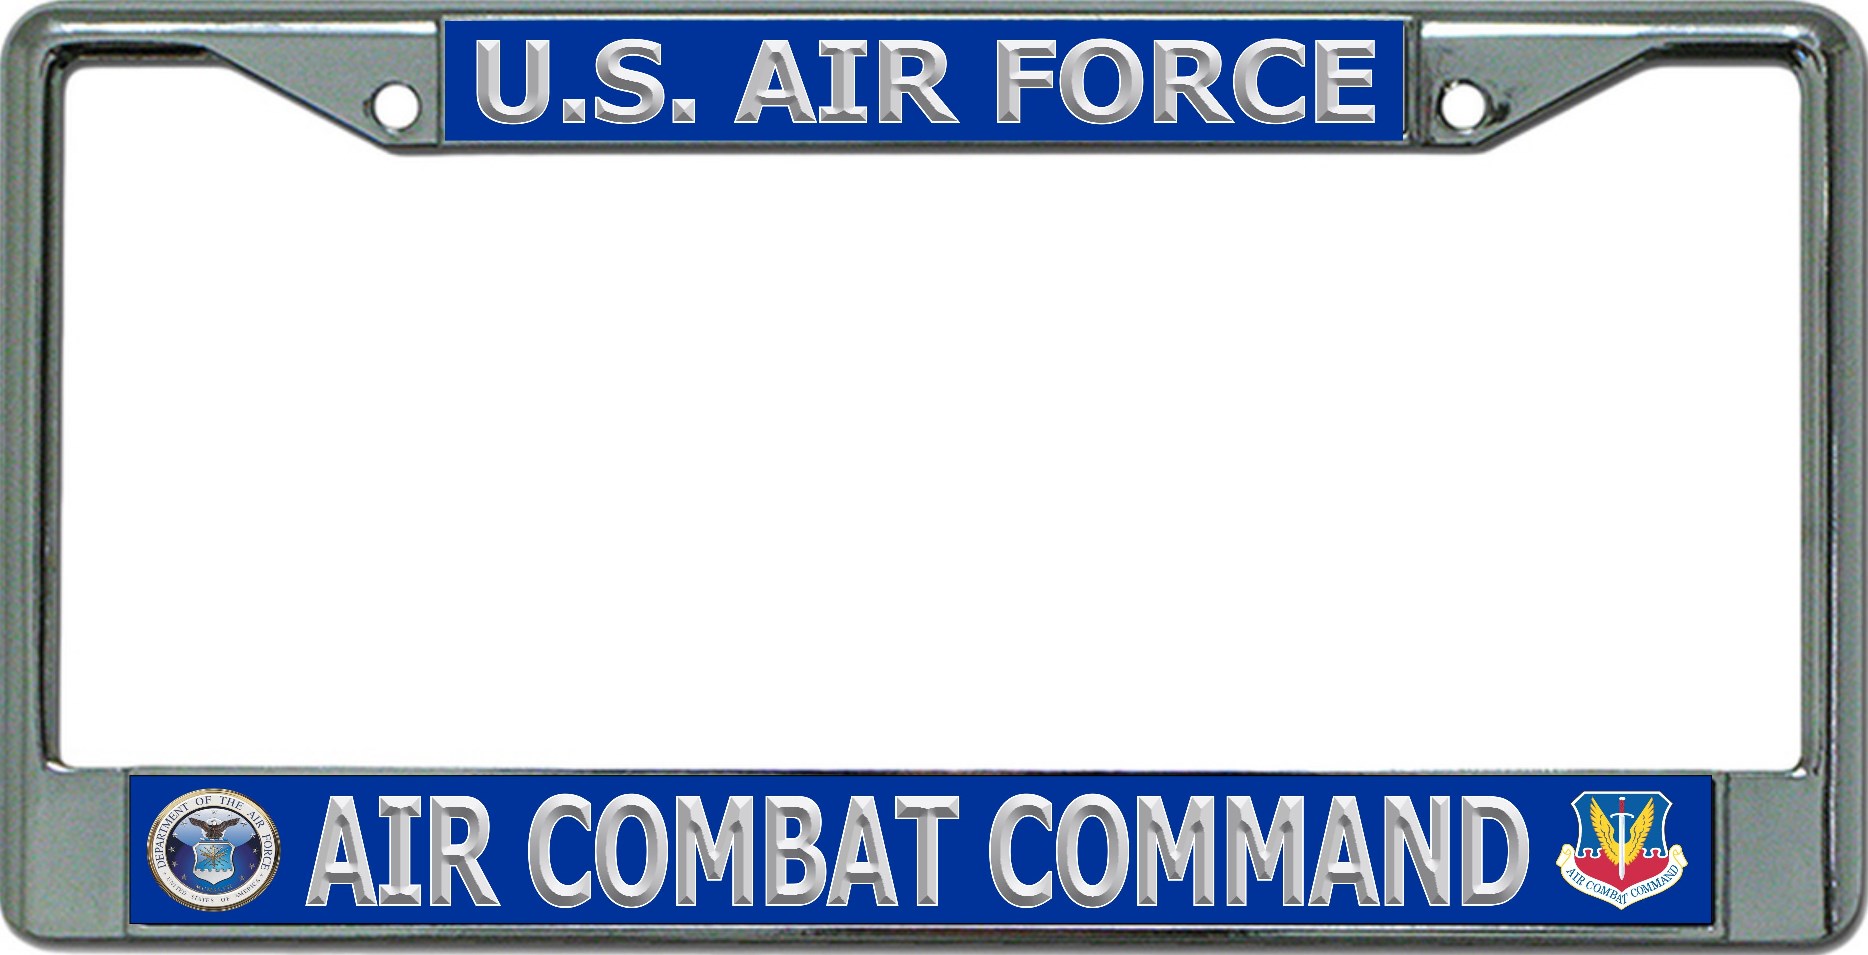 U.S Air Force Air Combat Command Chrome License Plate FRAME